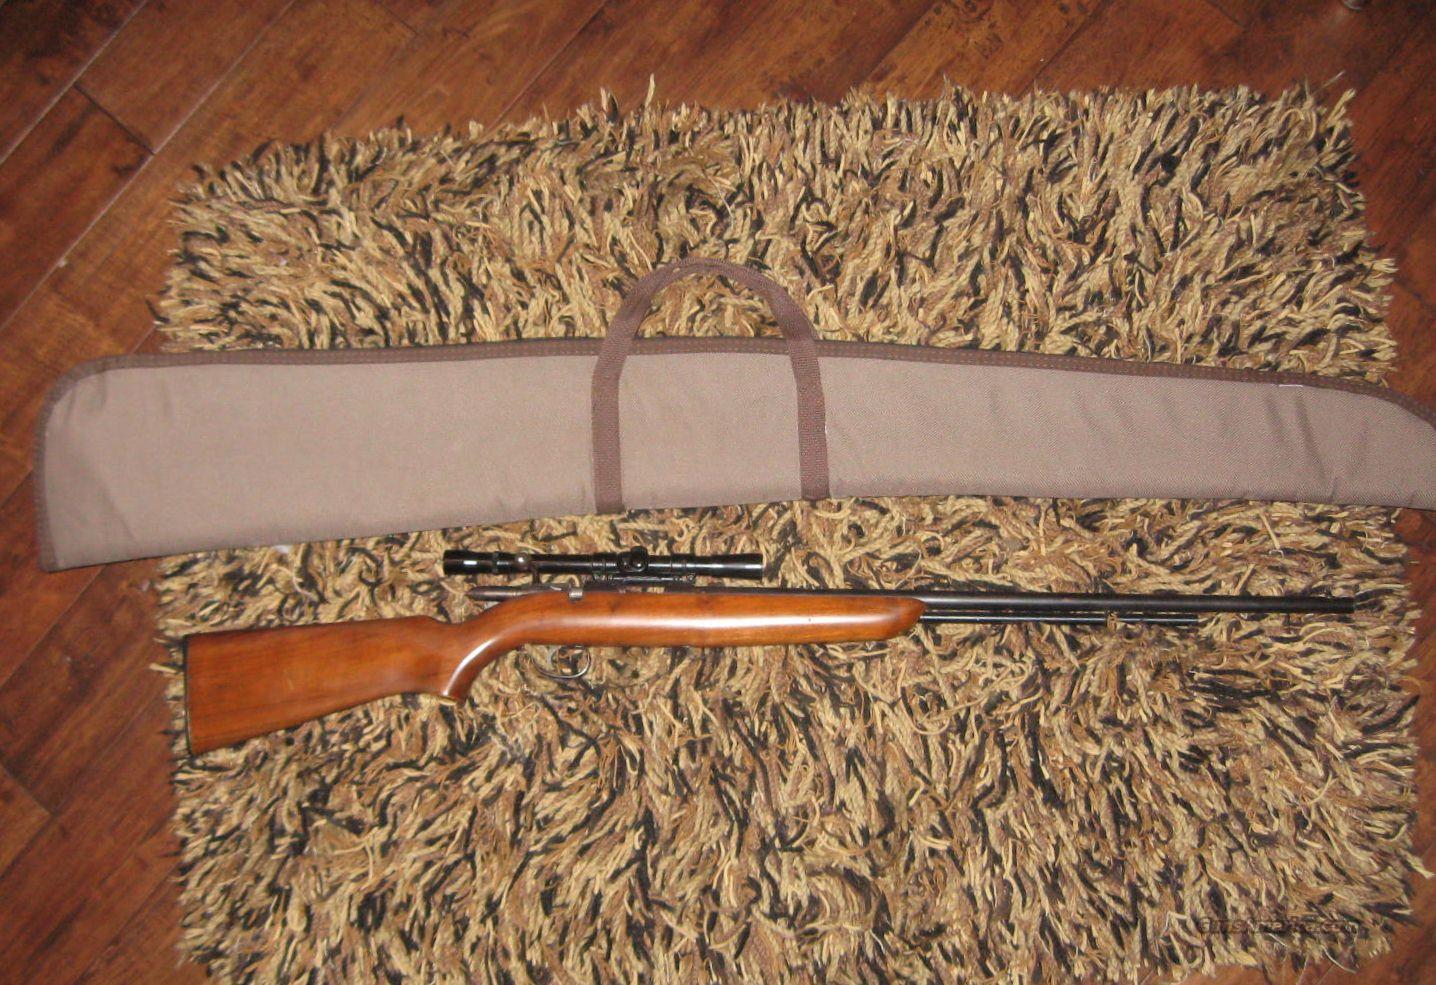 remington sportmaster 512 rifle